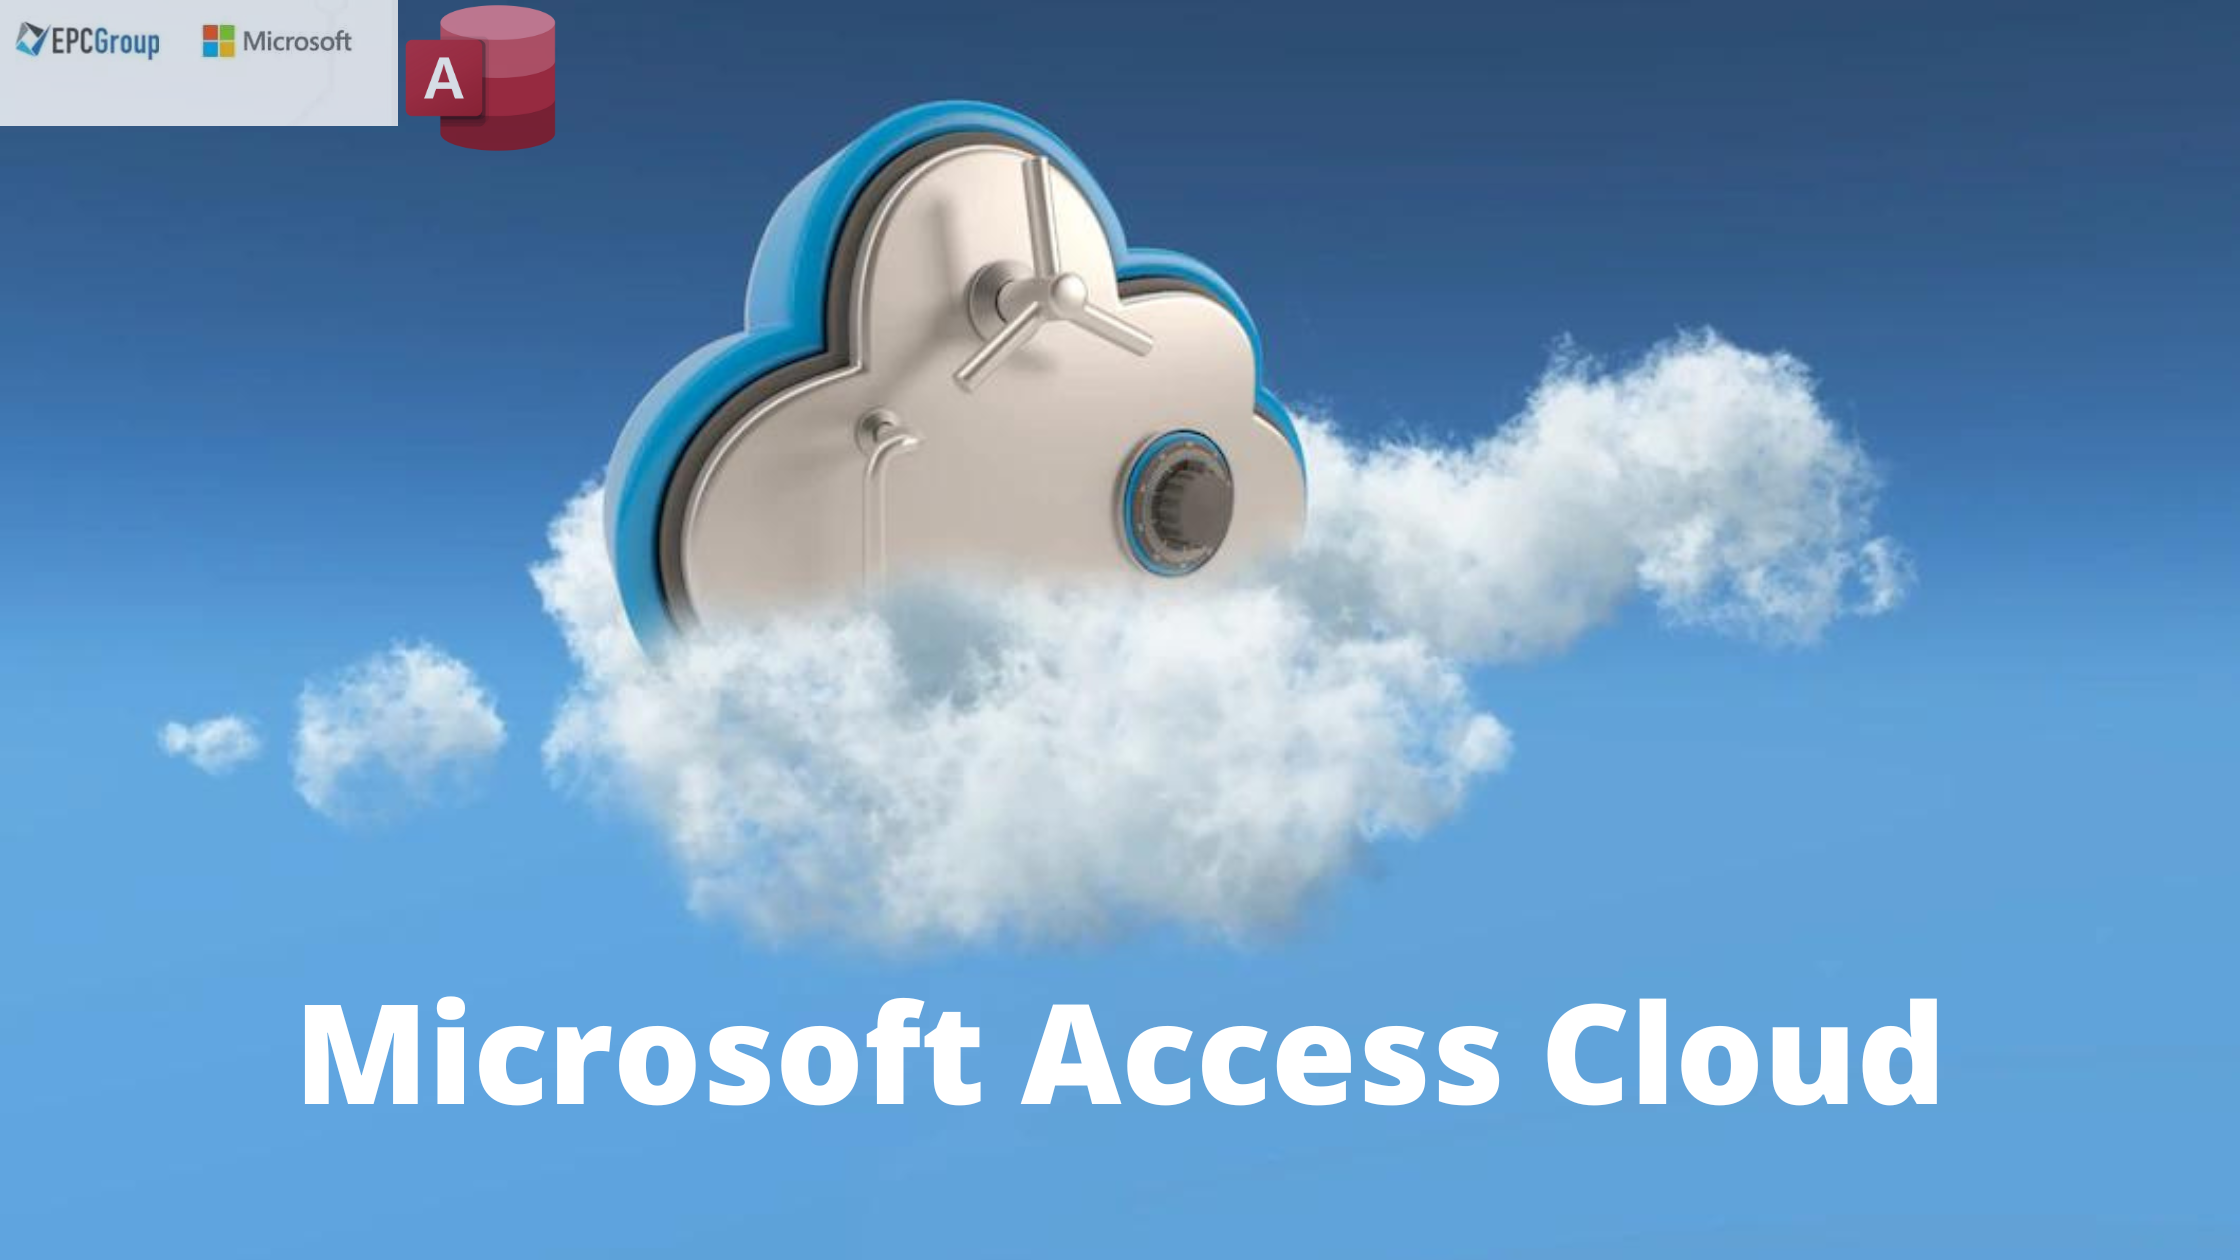 Microsoft Access Cloud: More Than Just File Storage - thumb image